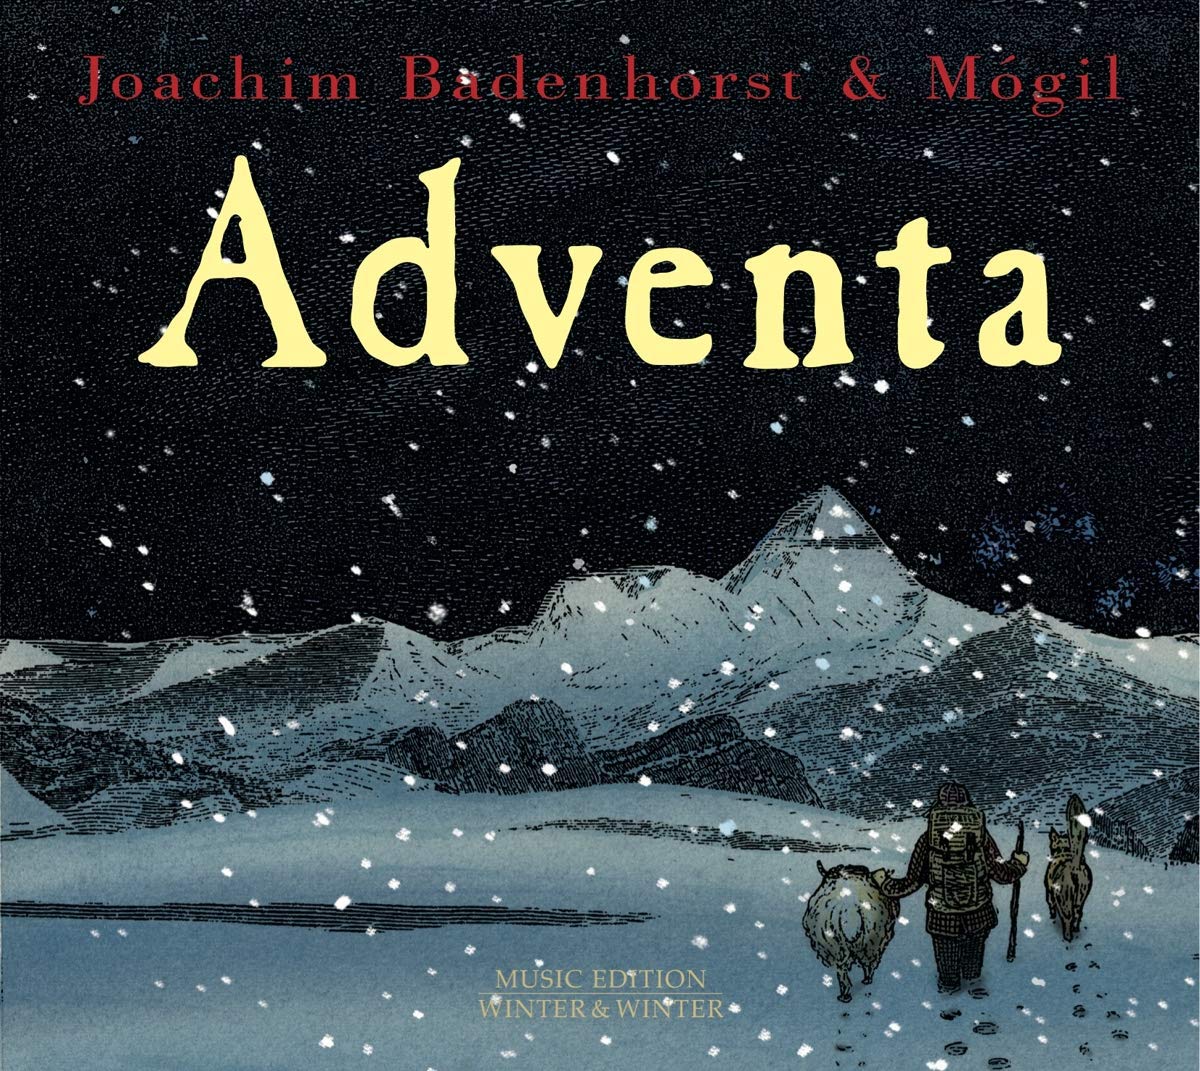 JOACHIM BADENHORST - Joachim Badenhorst  & Mogil : Adventa cover 